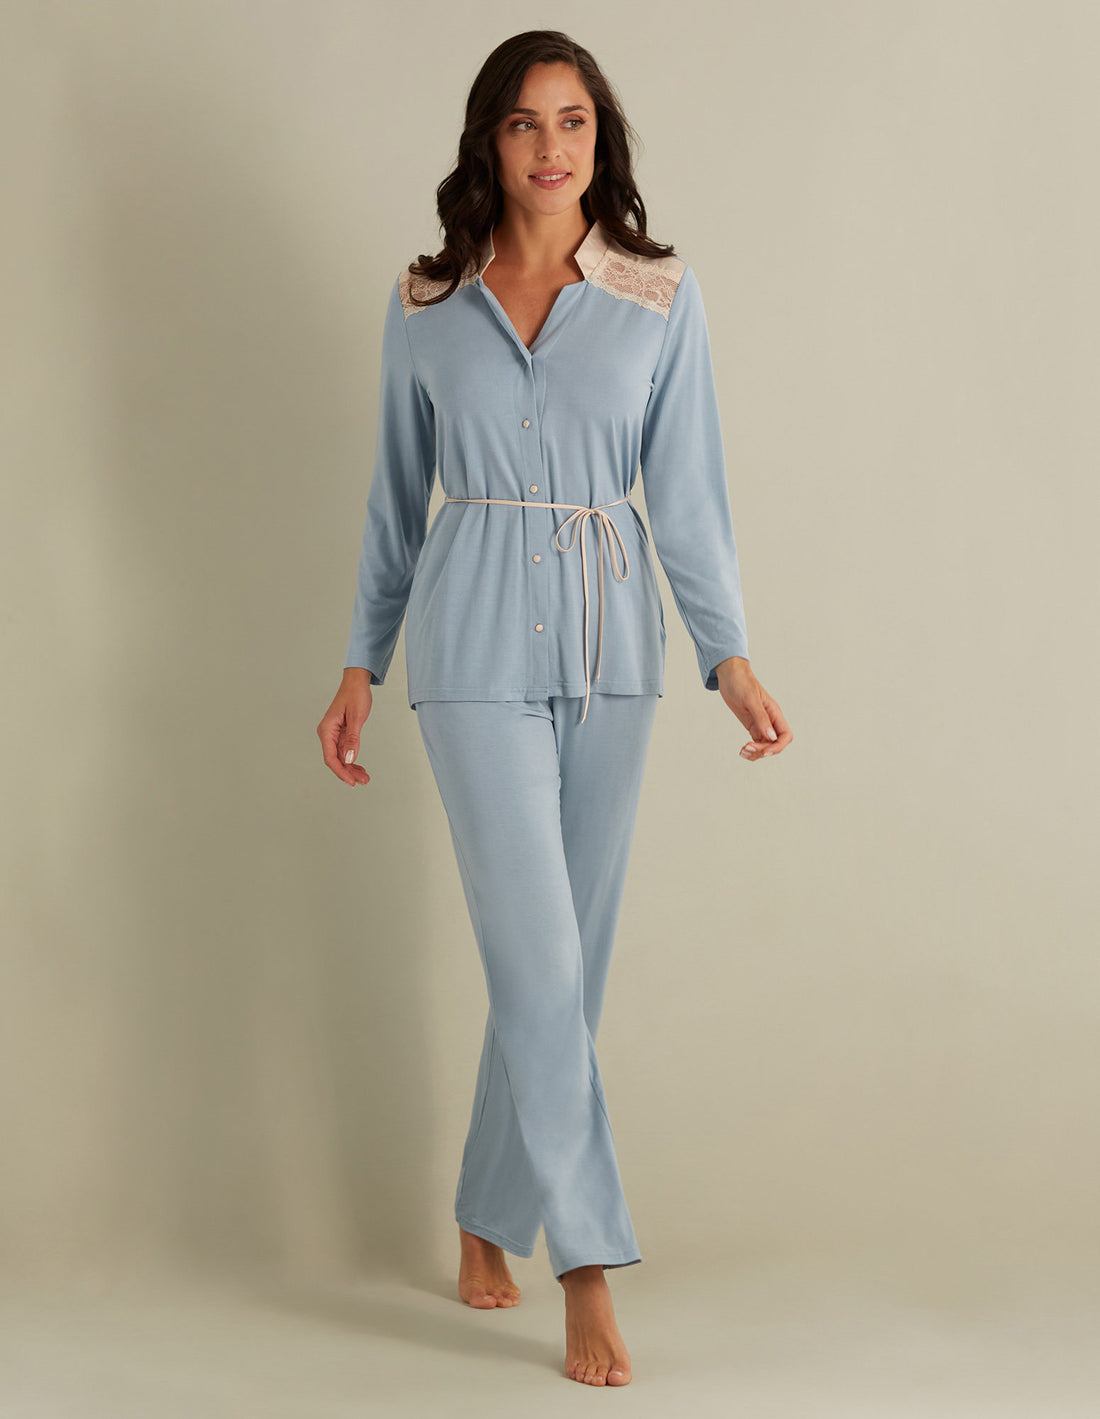 Magnolia Night Shirt Pajama Set_PPRD163002_038_02